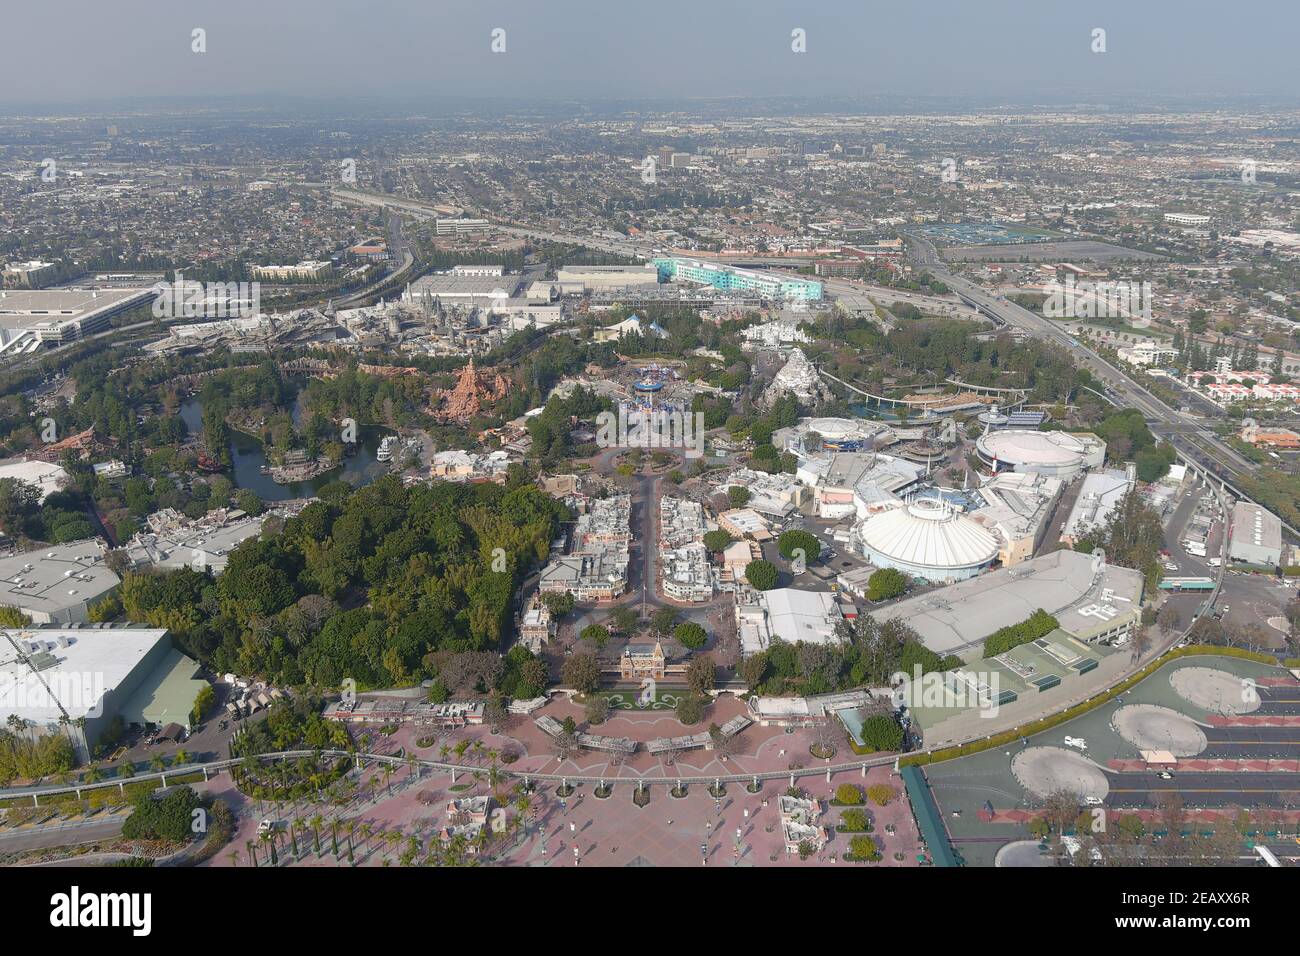 An Aerial View Of Disneyland Park Wednesday Feb 10 2021 In Anaheim Calif 2EAXX6R 